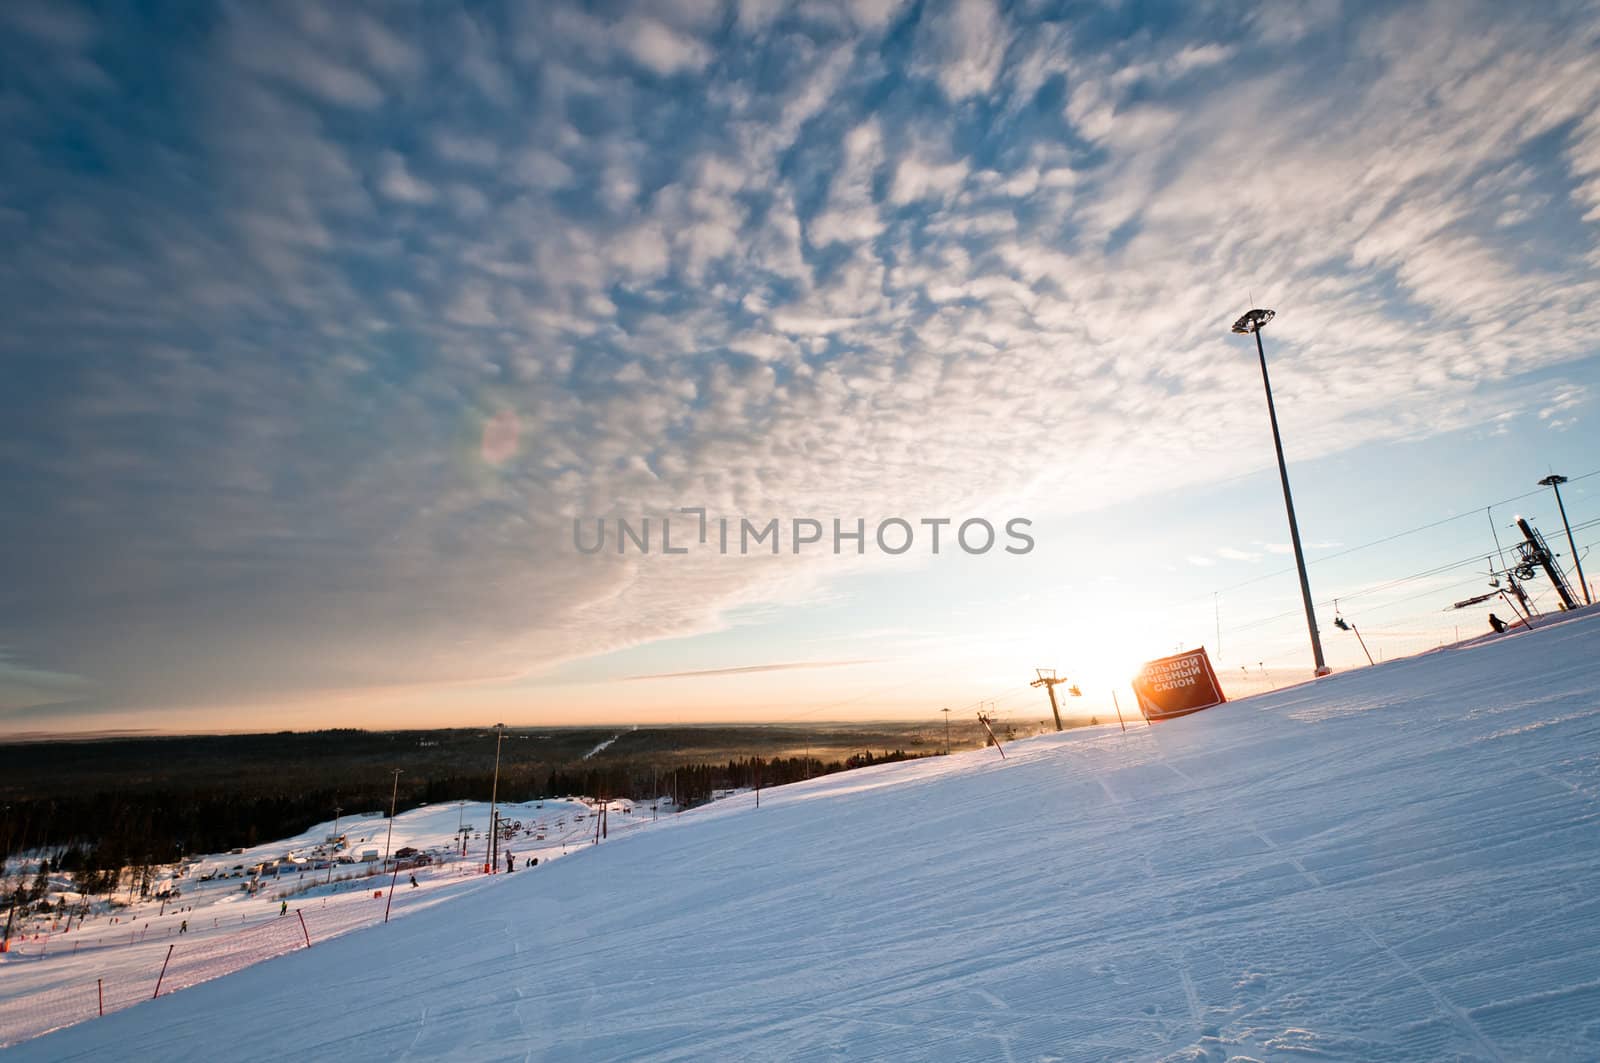 Ski resort slope at sunrise by dmitryelagin